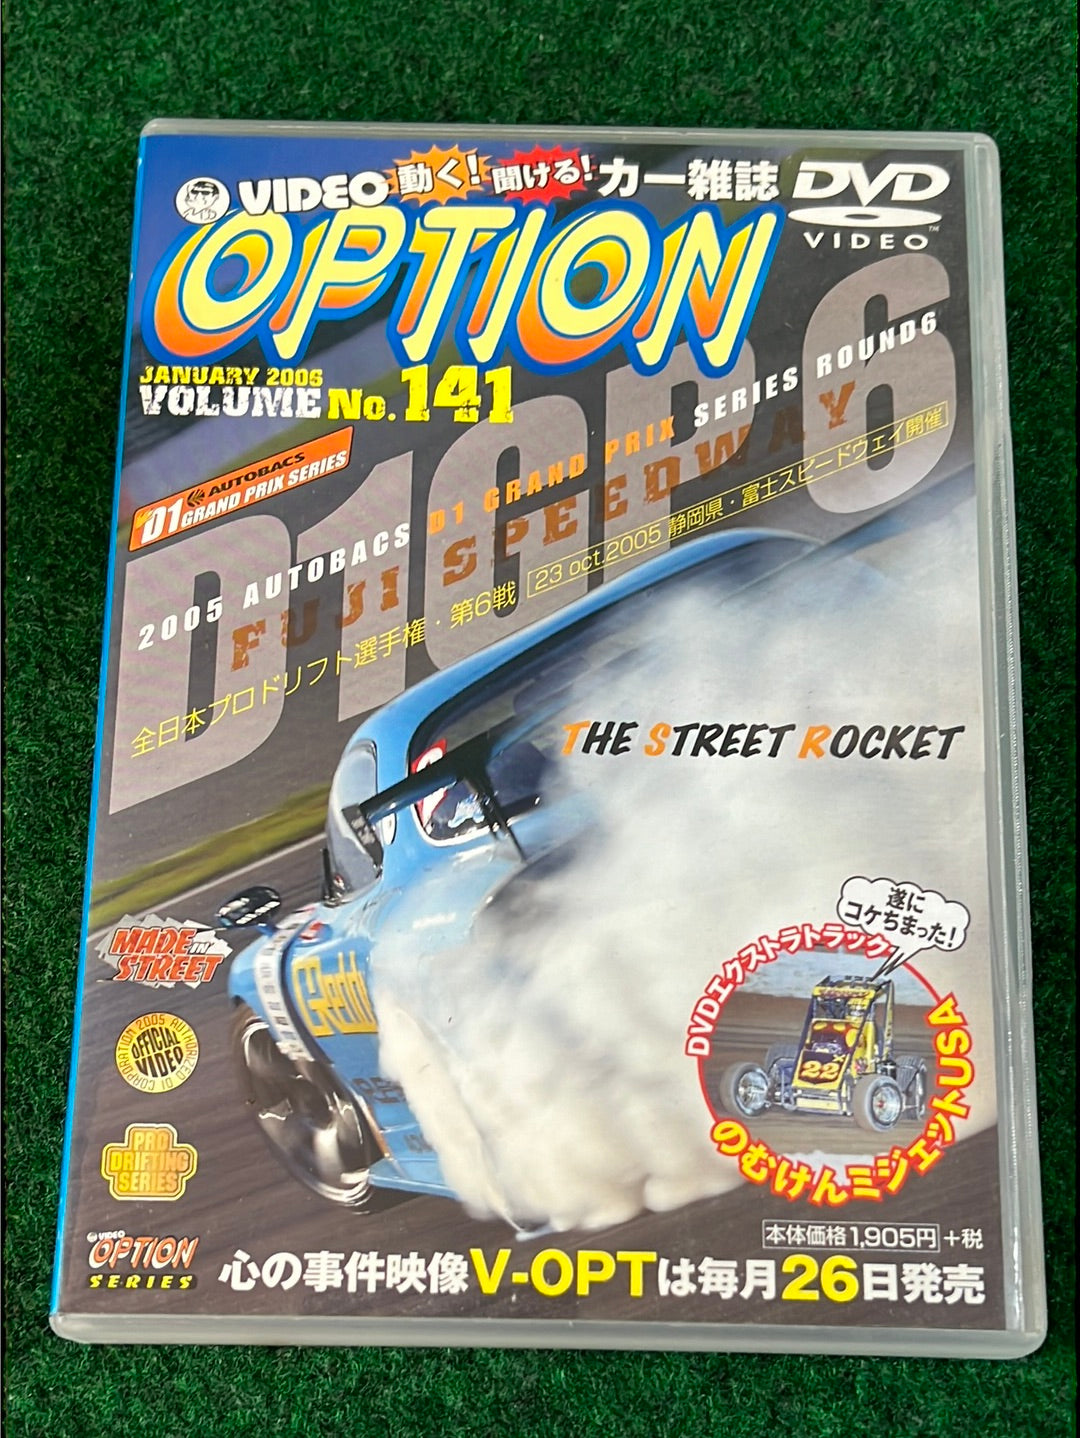 Option Video DVD - January 2006 Vol. 141 DVD